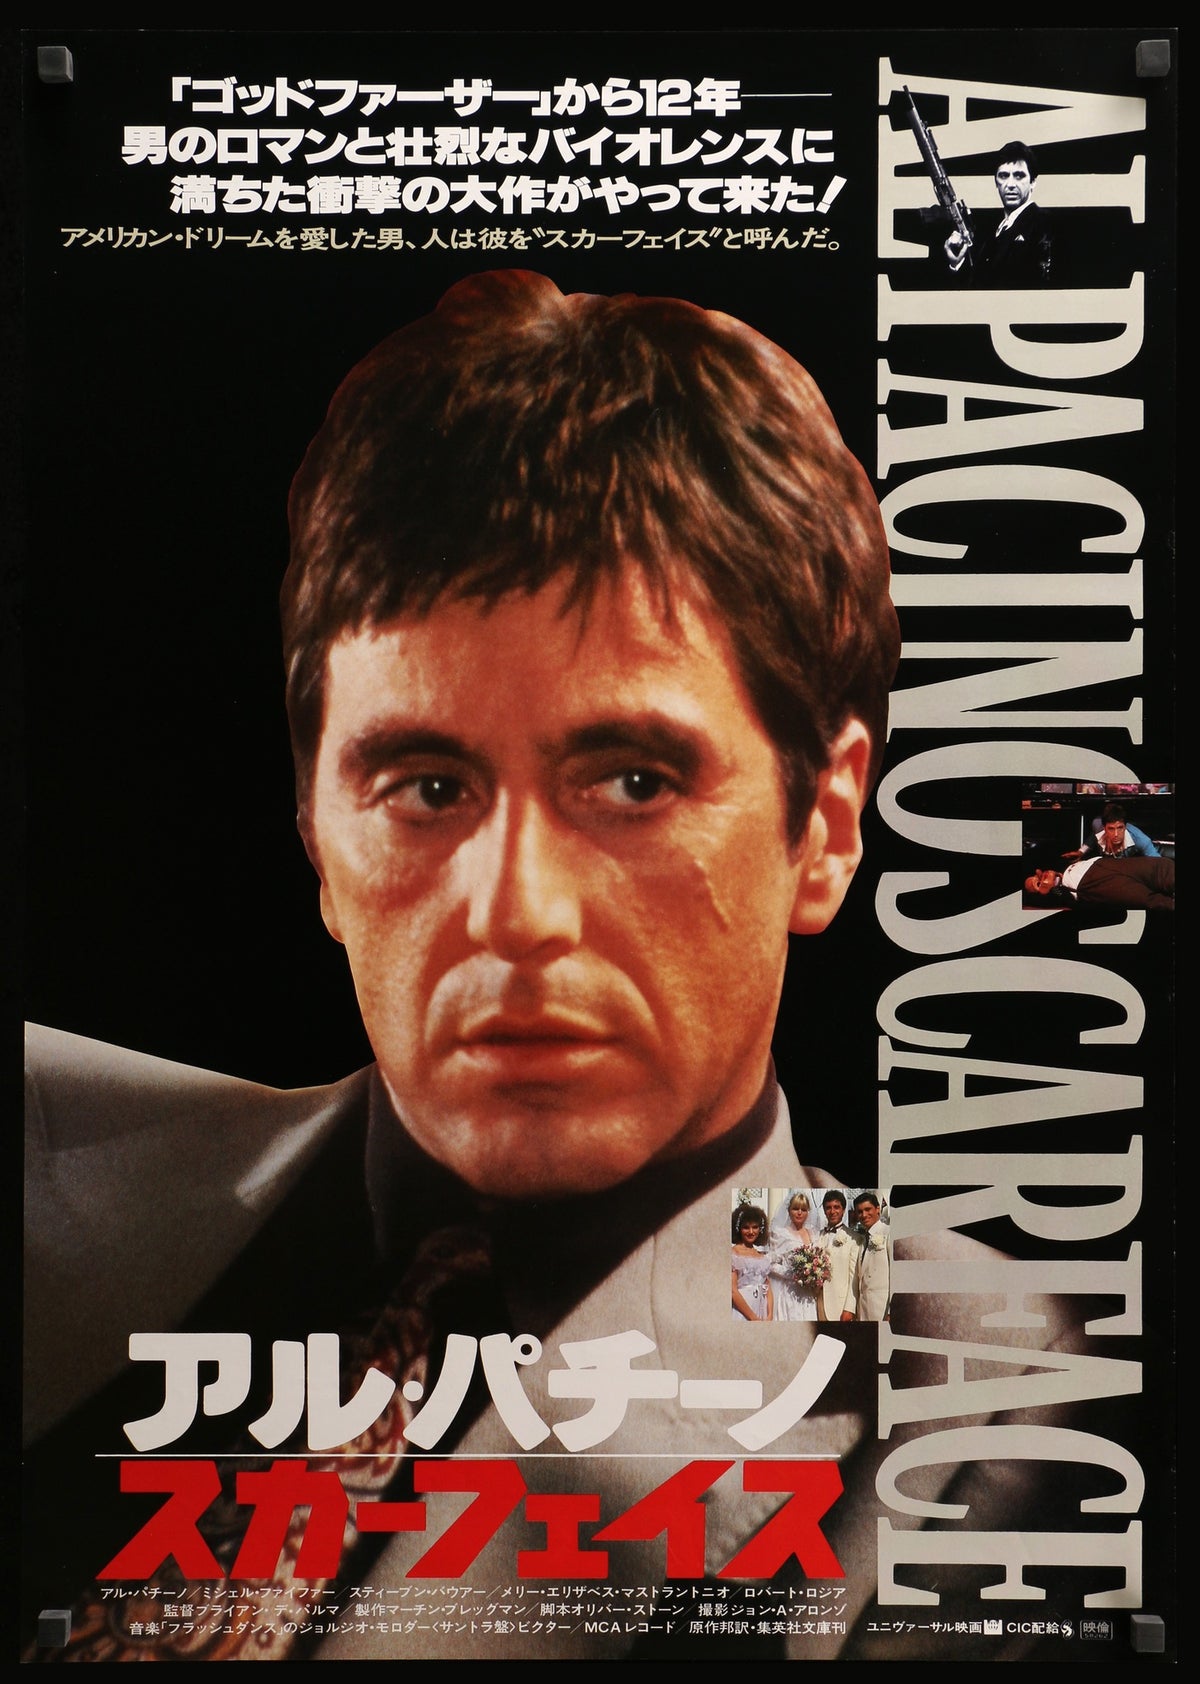 Scarface (1983) original movie poster for sale at Original Film Art